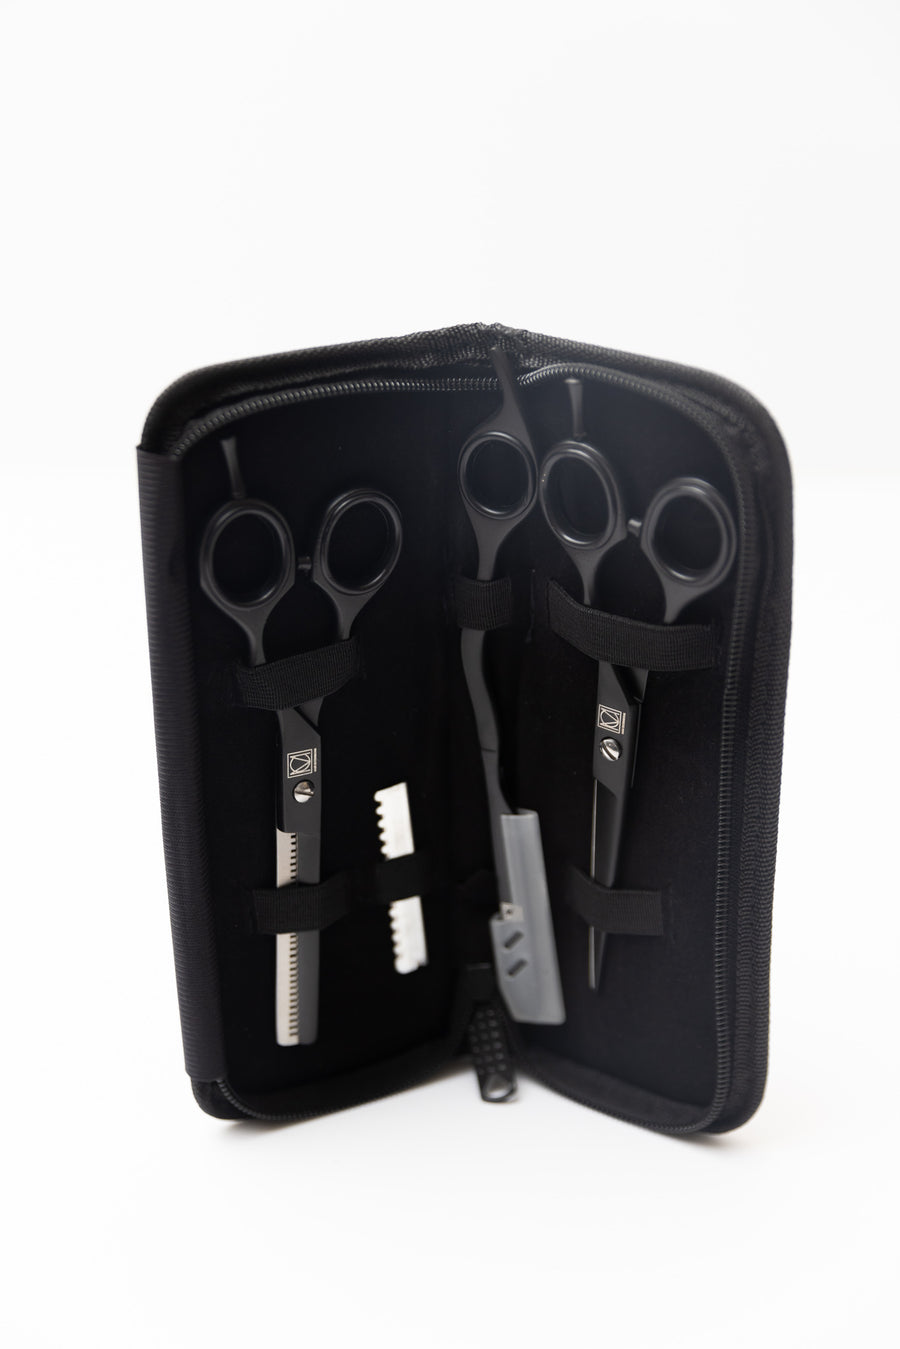 Scissor Kits-Christian Michael Hair Extensions